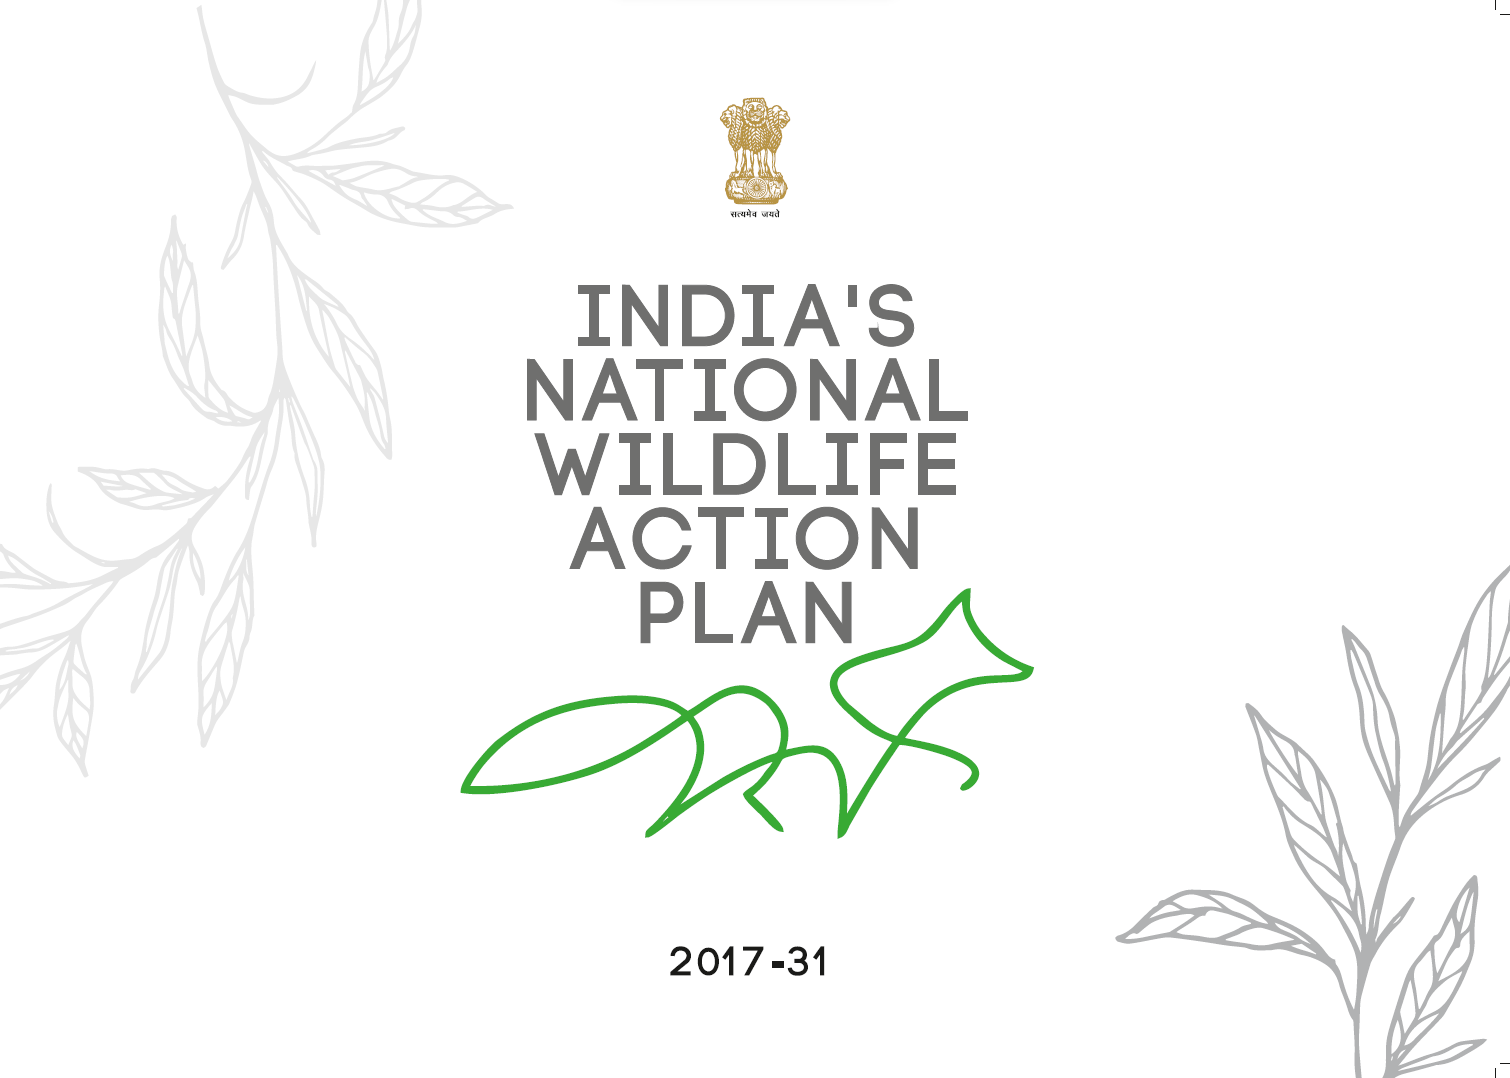 India's national wildlife action plan 2017-31